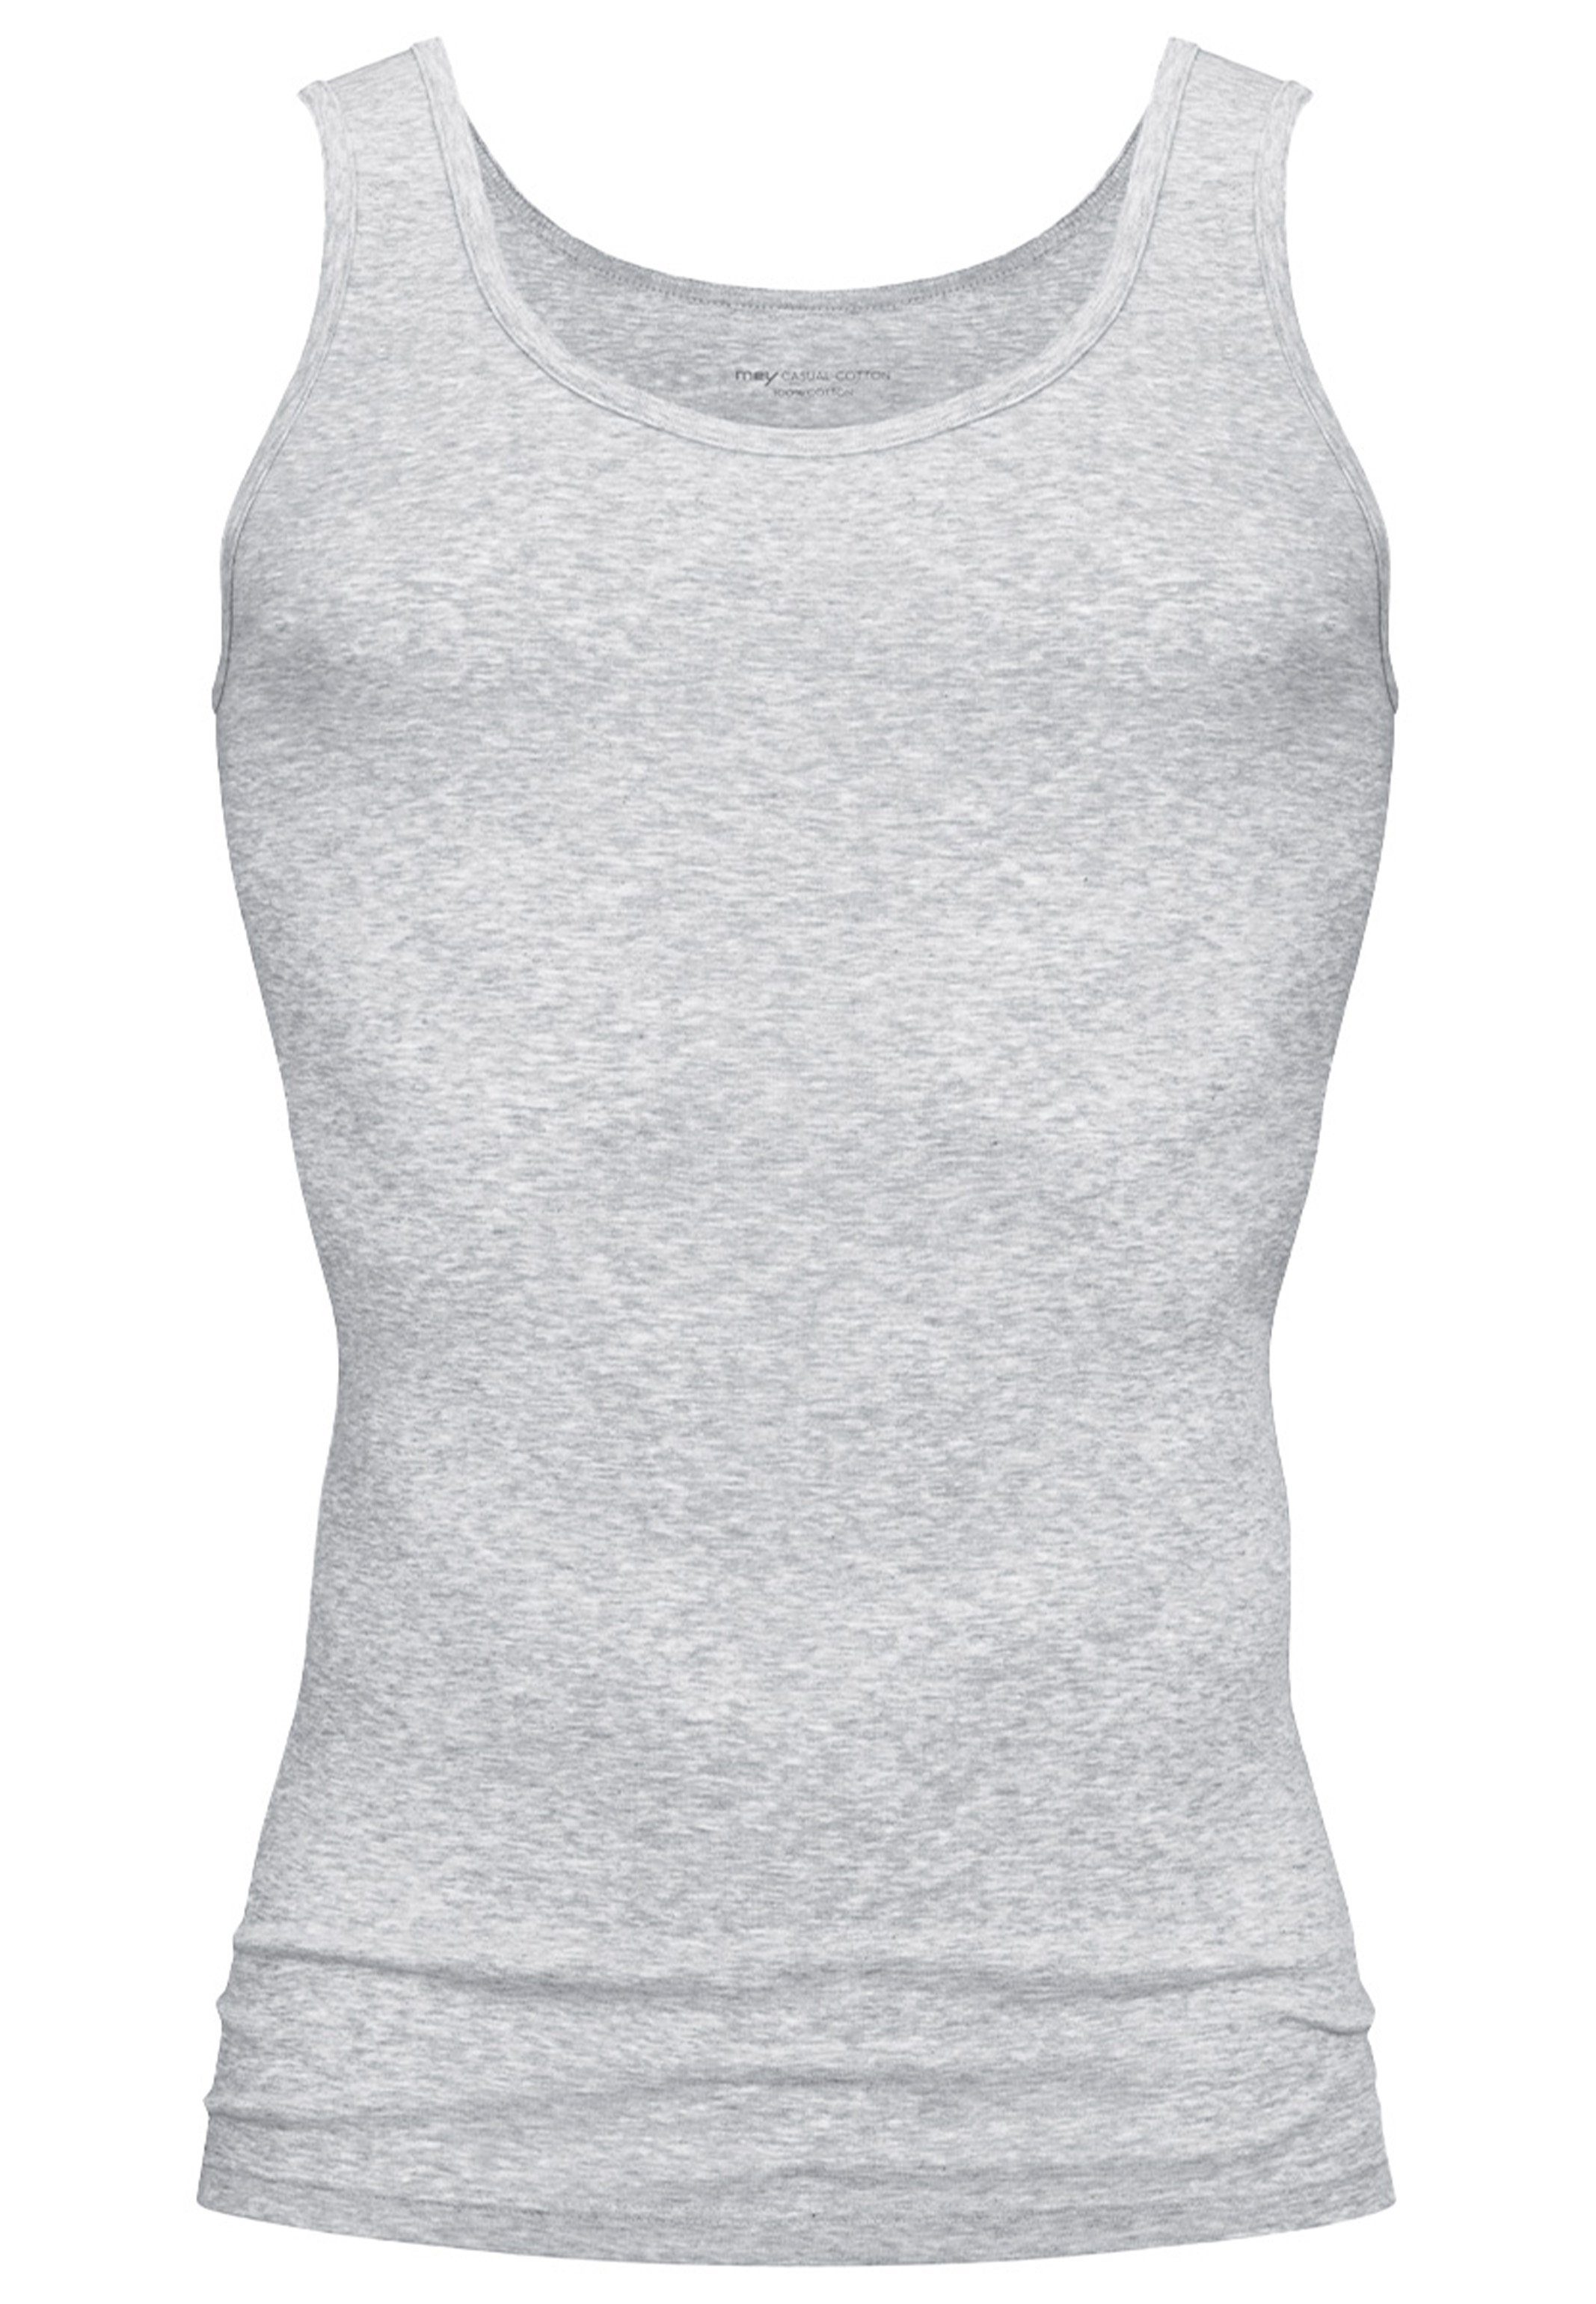 Mey Unterhemd Casual Cotton (1-St) - Baumwolle Light / melange Unterhemd - grey Tanktop